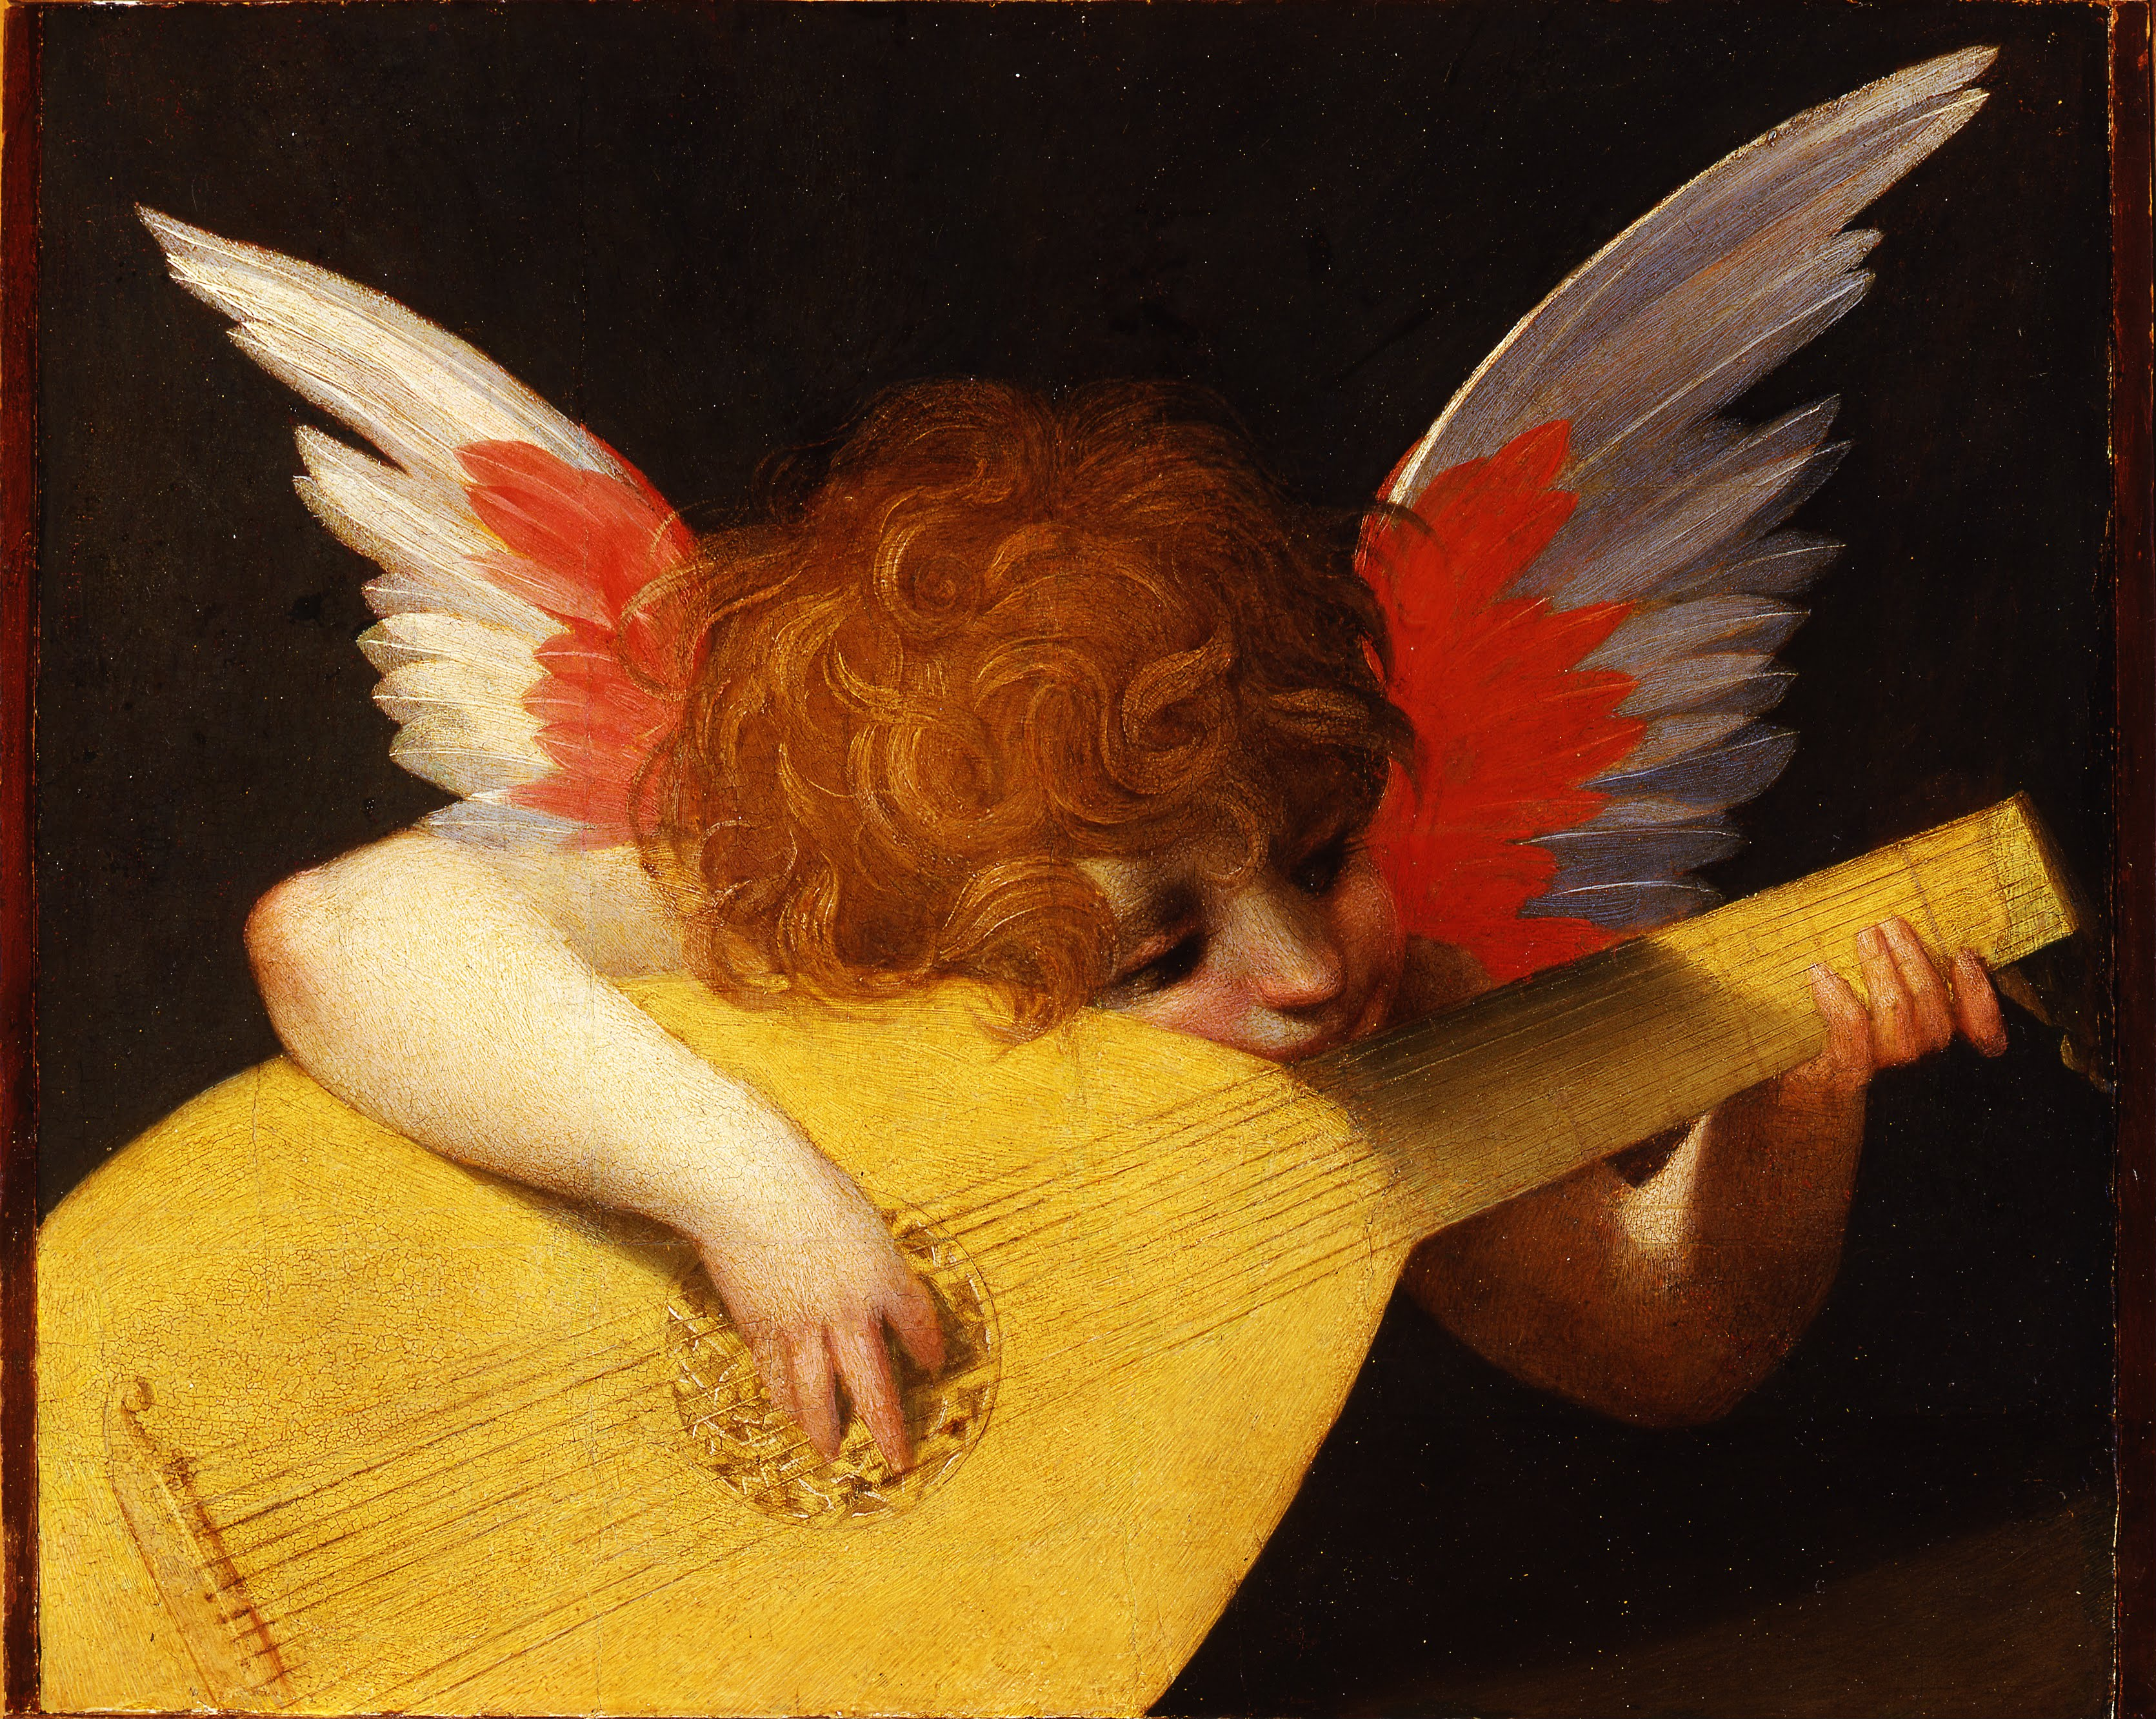 Янгол, що грає на лютні by Rosso Fiorentino - 1521 - 39.5 x 47 см 